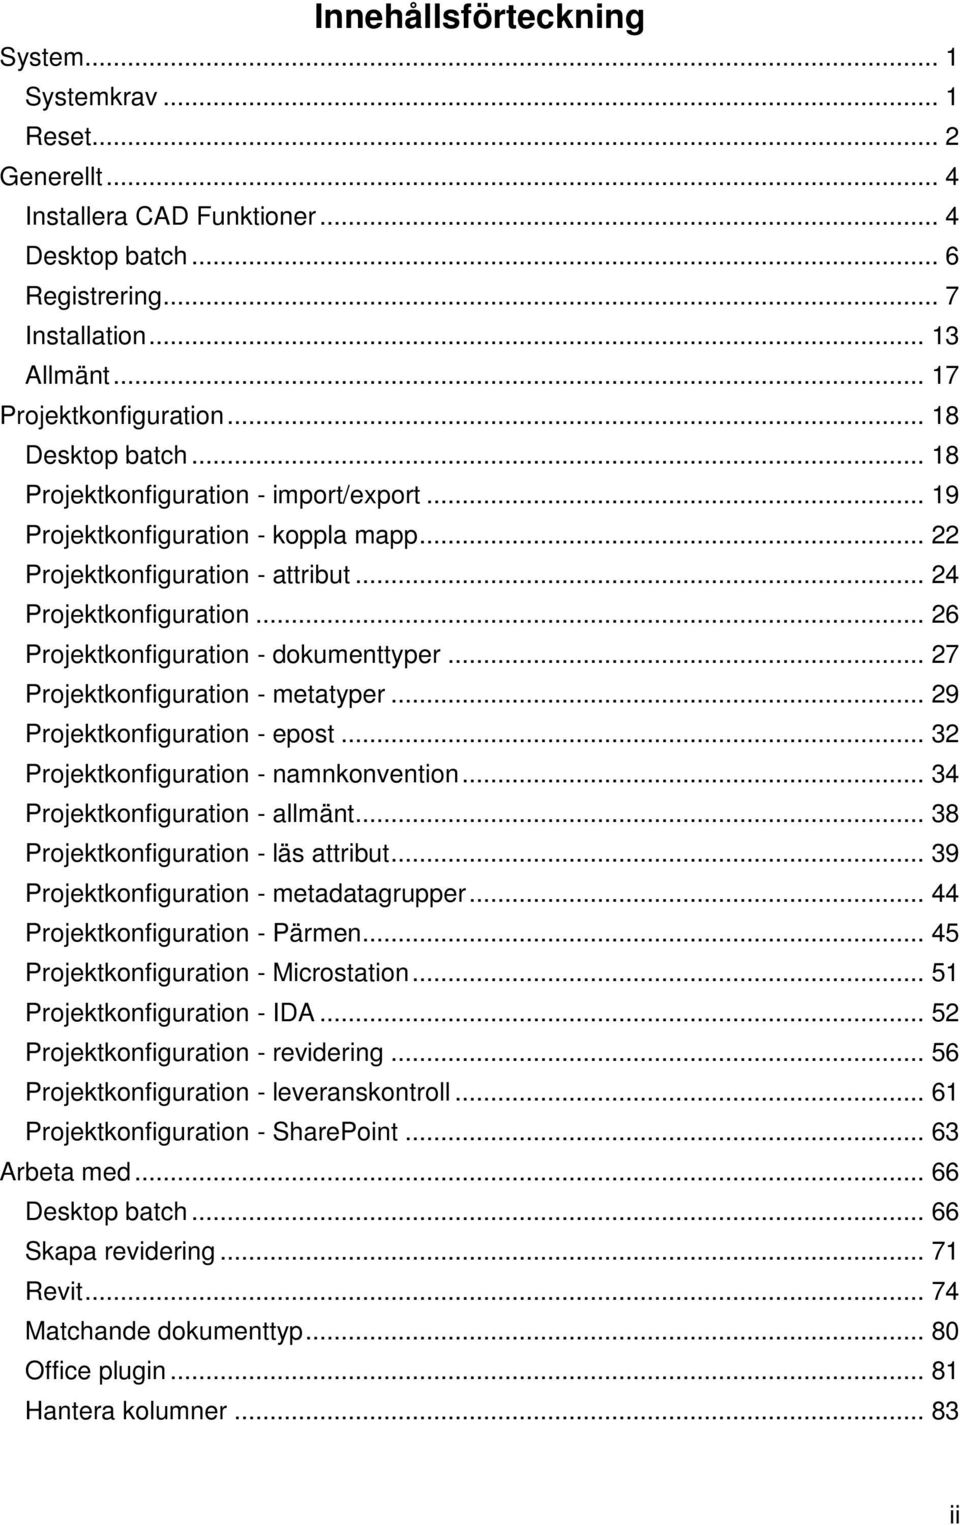 .. 26 Projektkonfiguration - dokumenttyper... 27 Projektkonfiguration - metatyper... 29 Projektkonfiguration - epost... 32 Projektkonfiguration - namnkonvention... 34 Projektkonfiguration - allmänt.